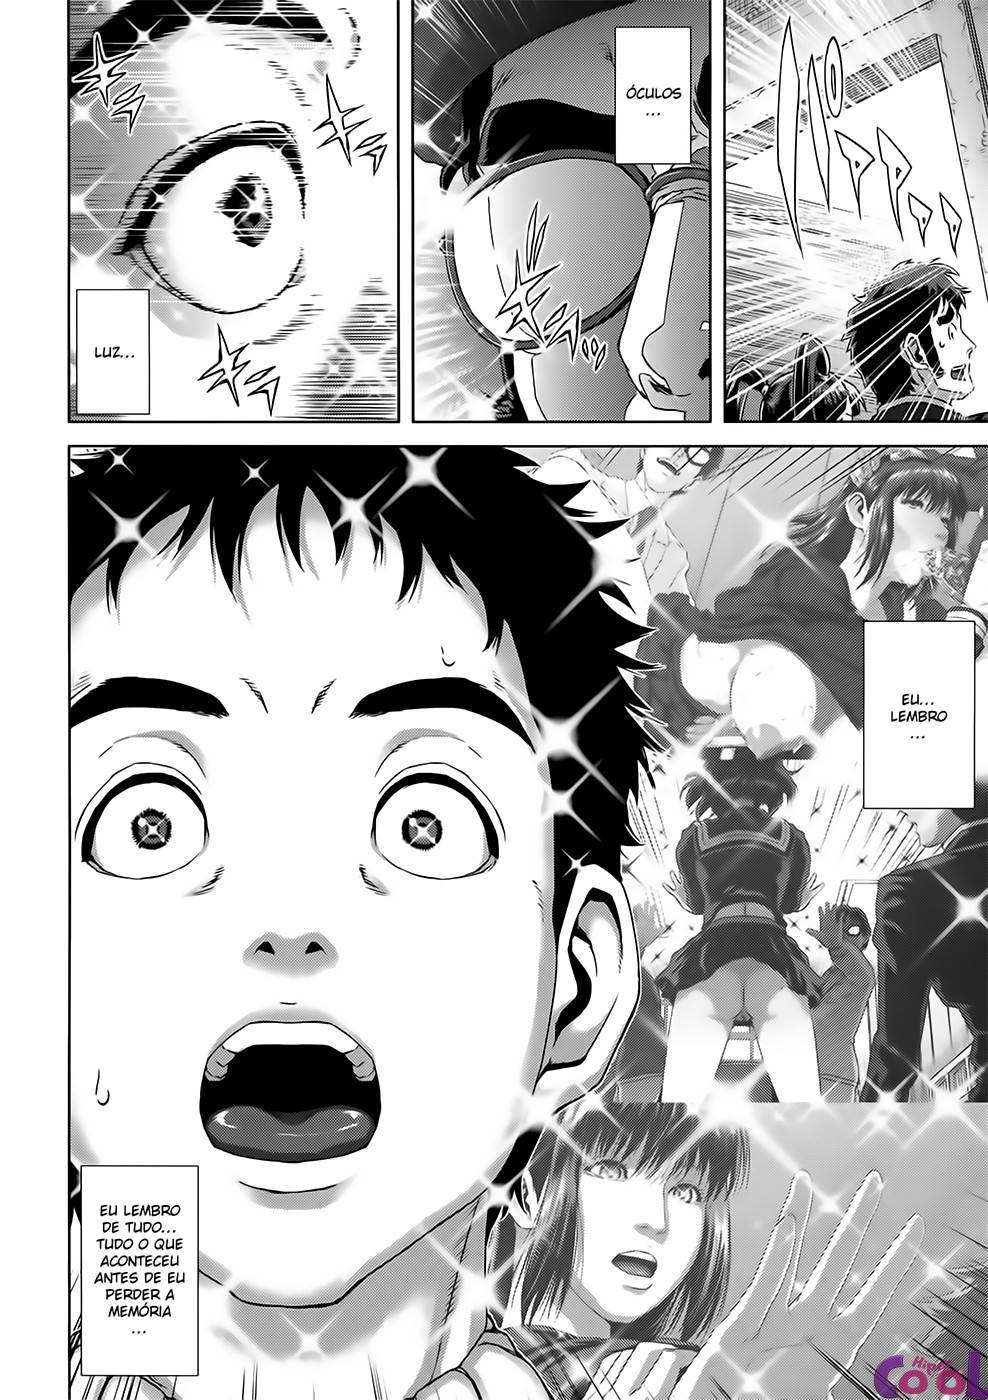 chiteki-koukishin-chapter-04-page-12.jpg